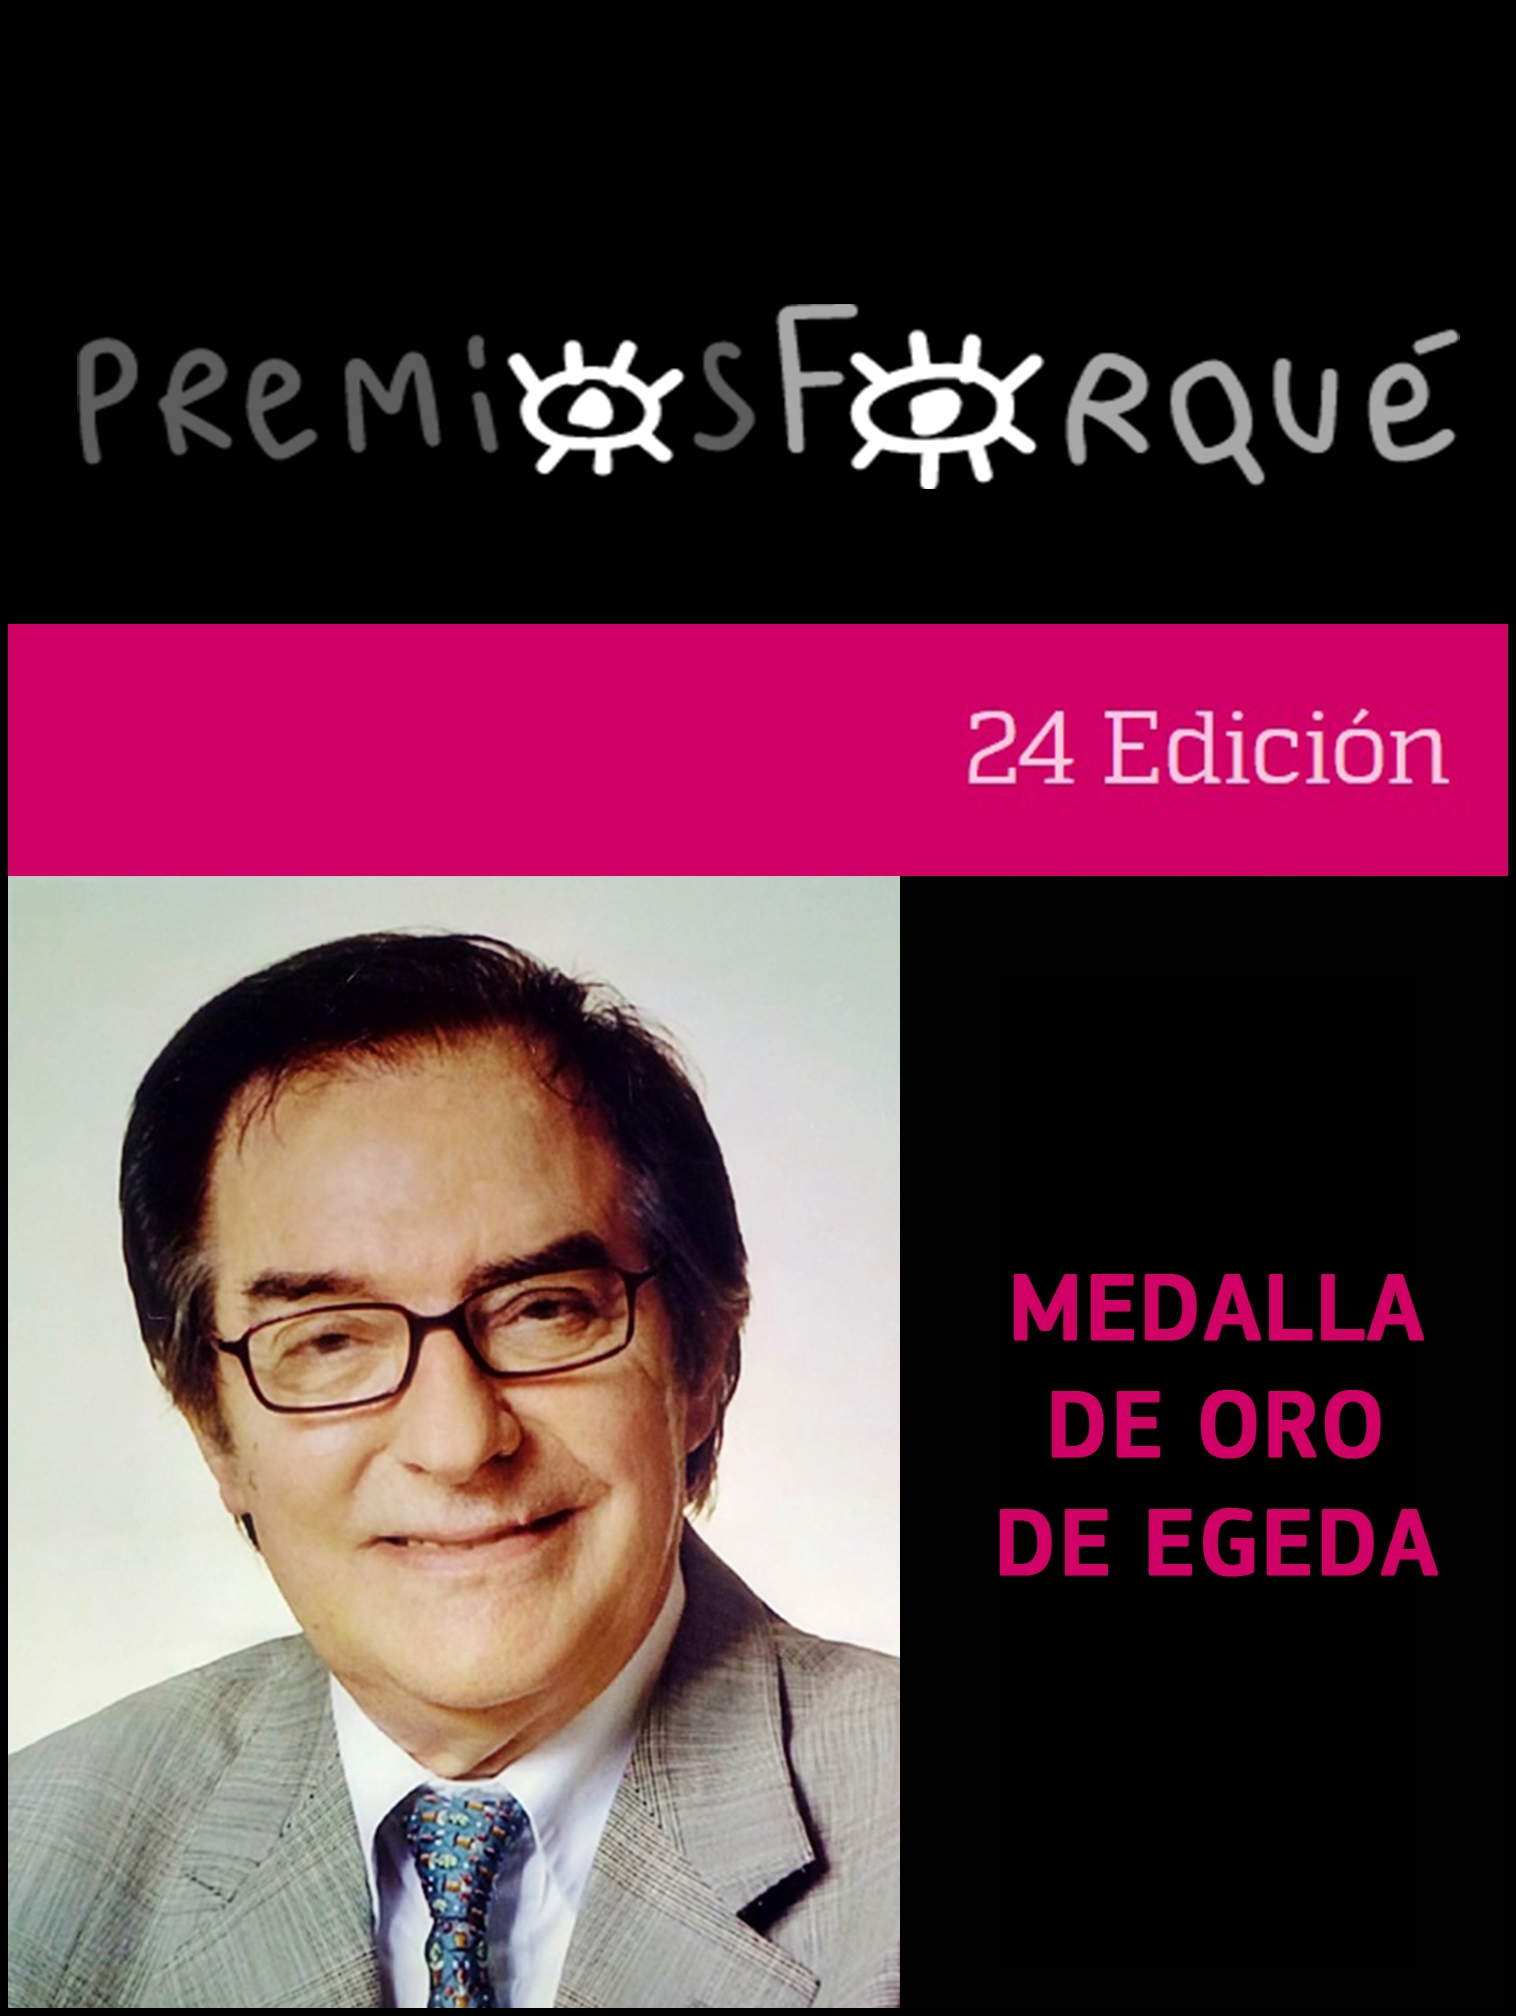 PremiosForqueMedallaOro2019MEDIAInterior